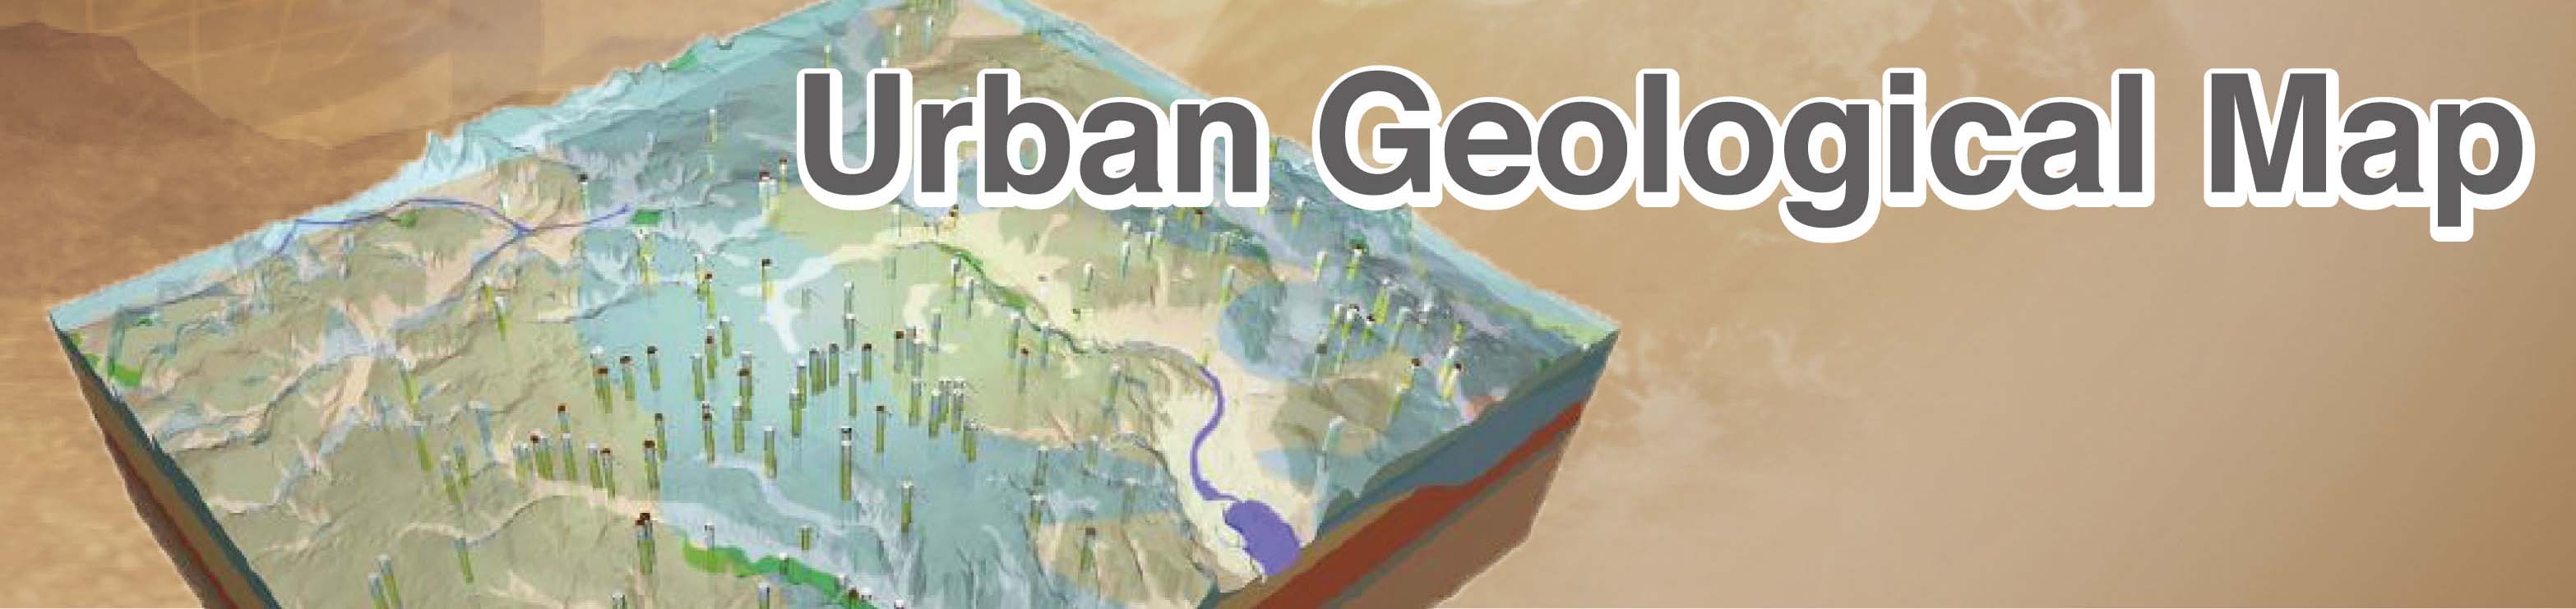 Urban Geological Map